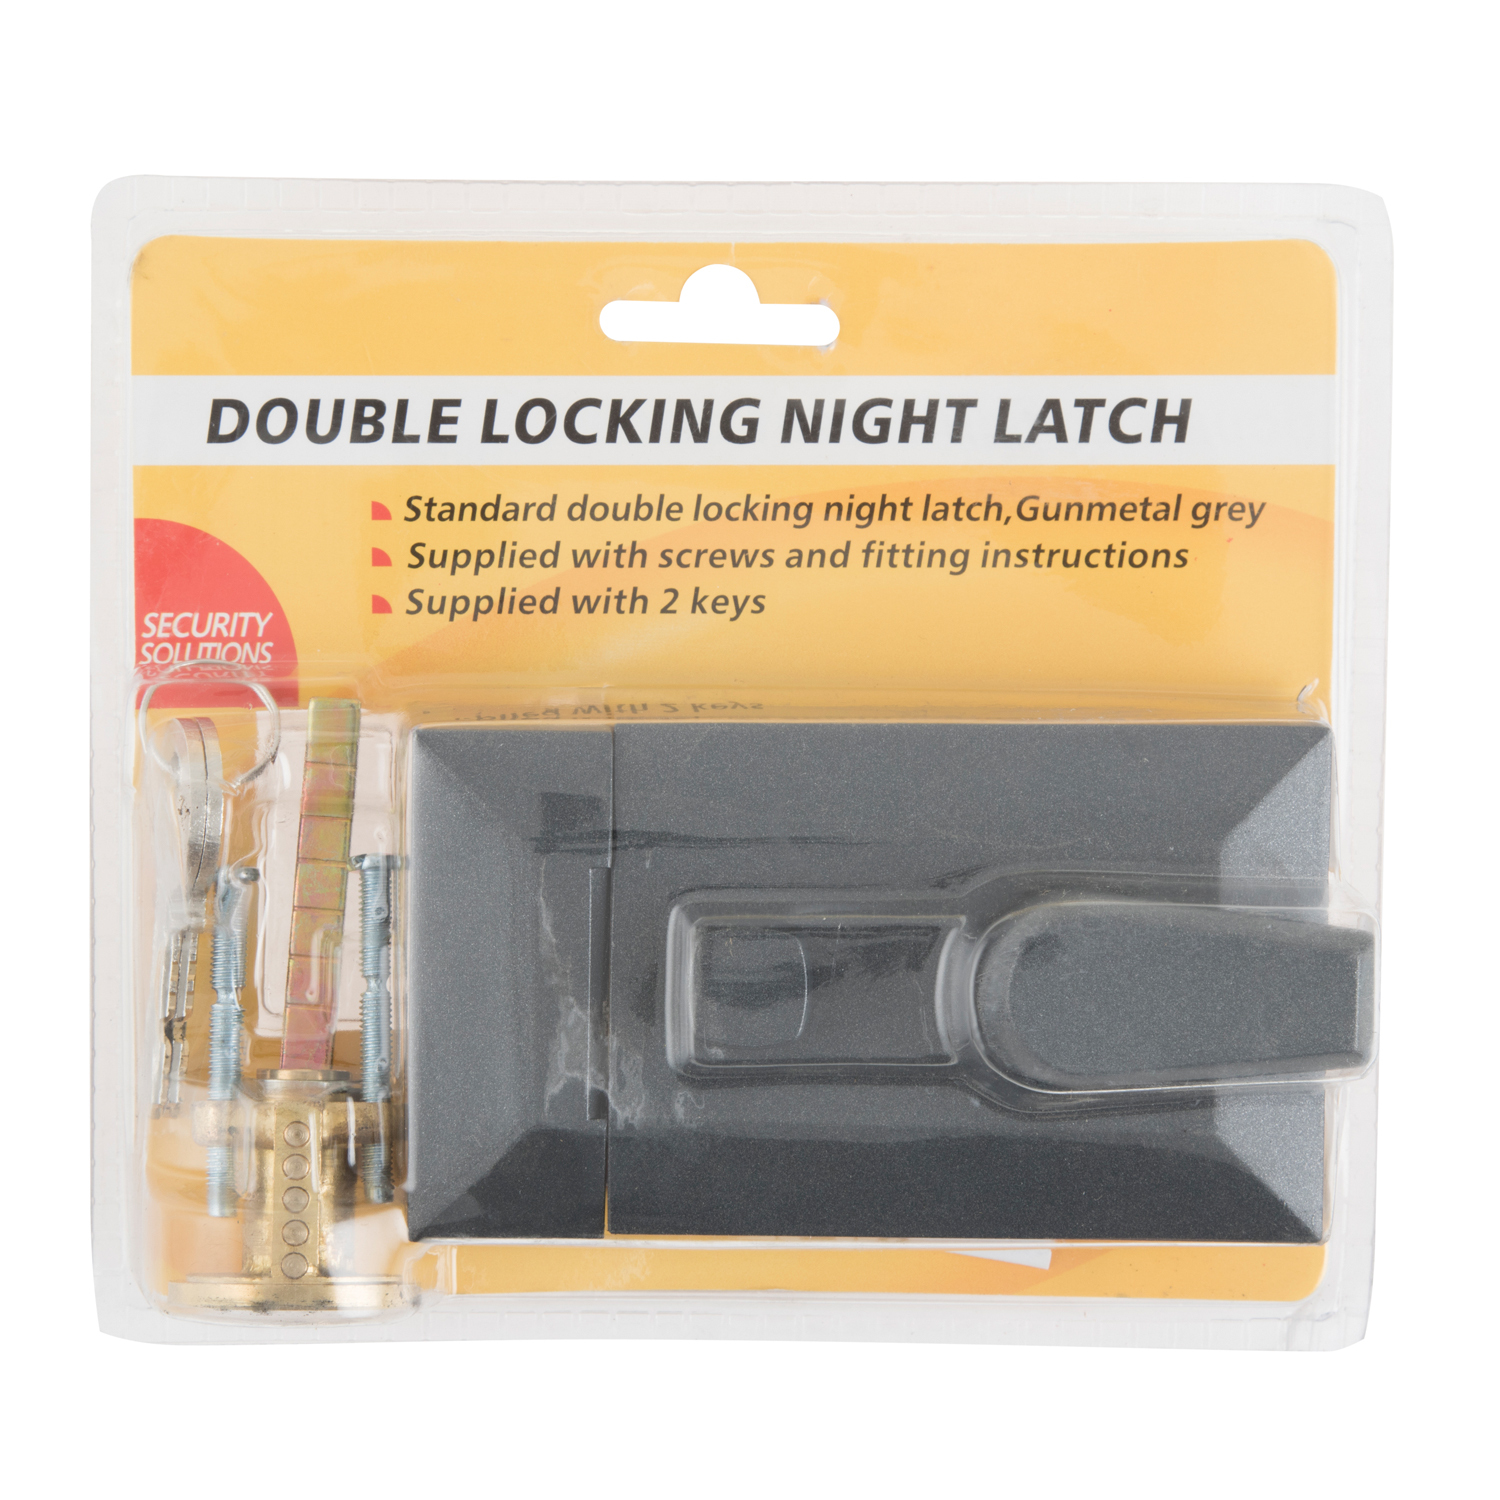 Hiatt Gunmetal Grey Double Locking Night Latch with 2 Keys Image